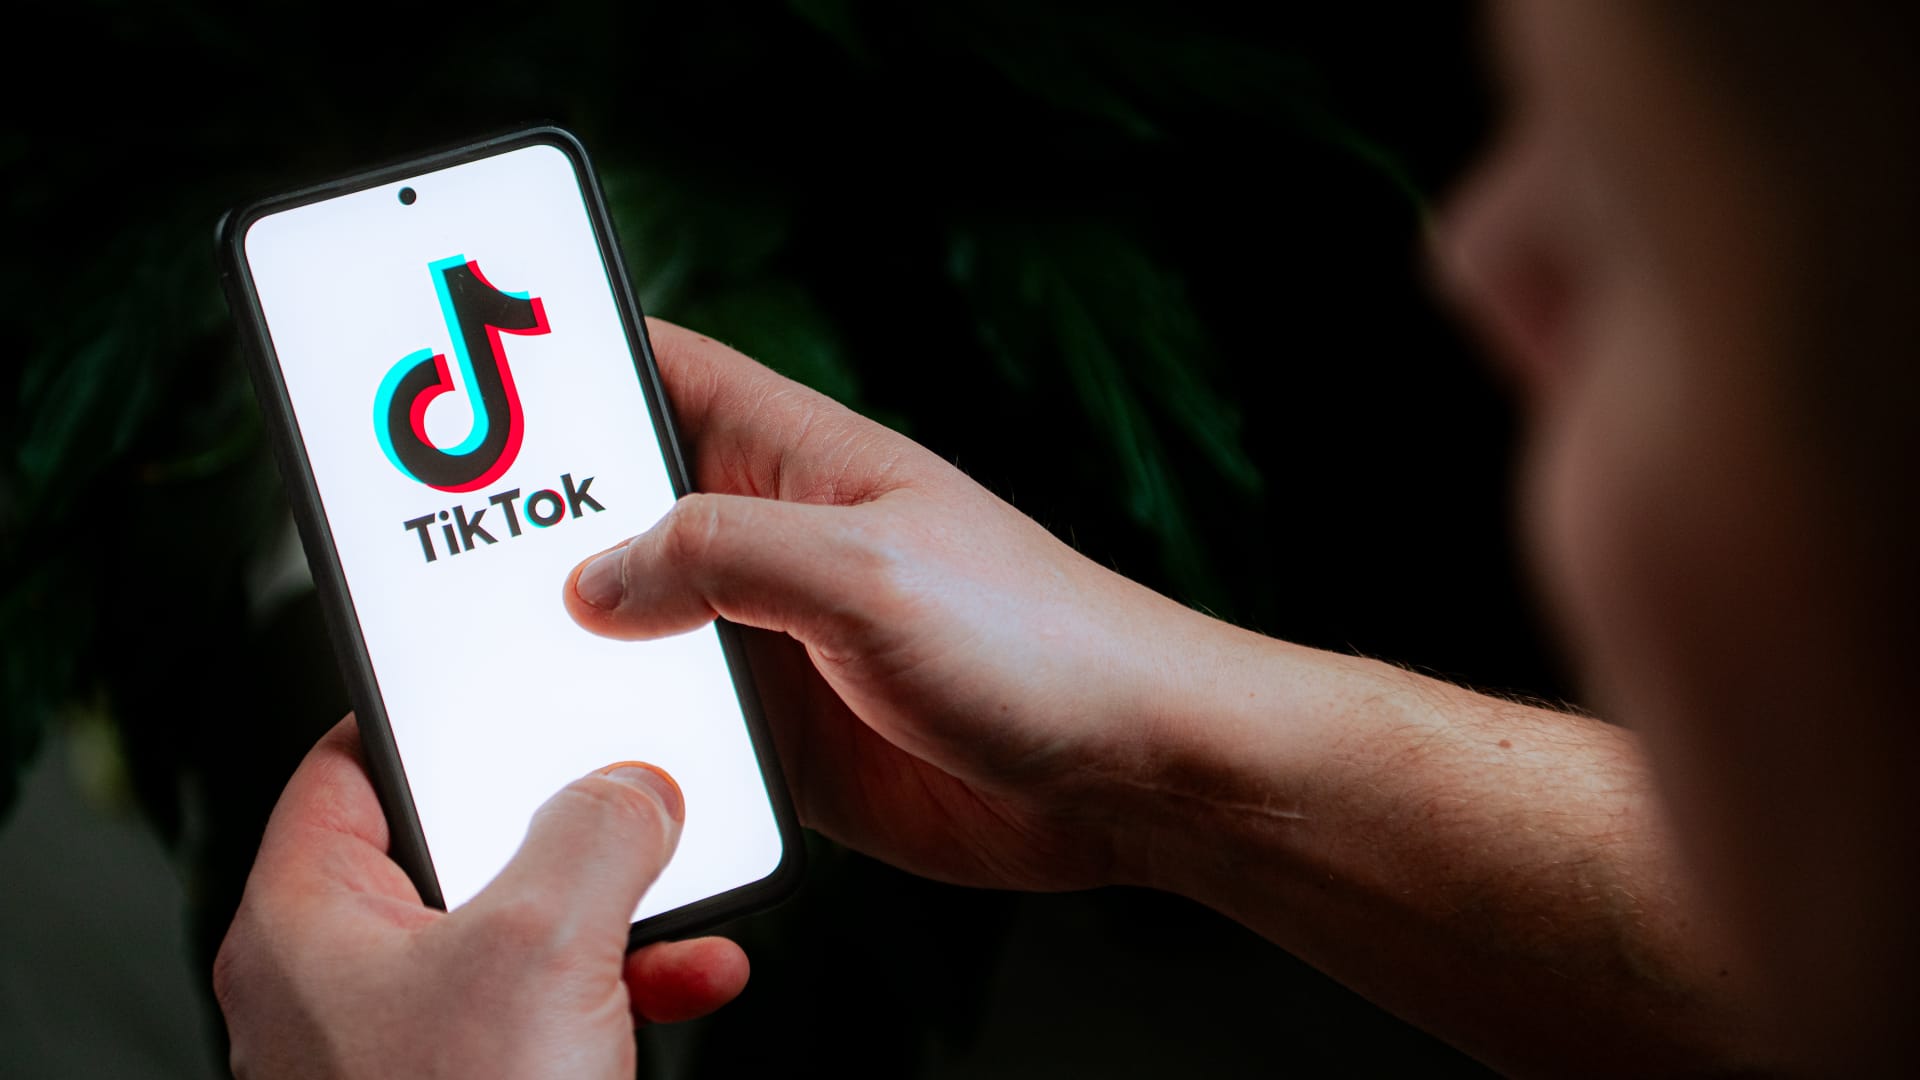 Indonesia’s presidential hopefuls on TikTok to woo Gen Zs, millennials